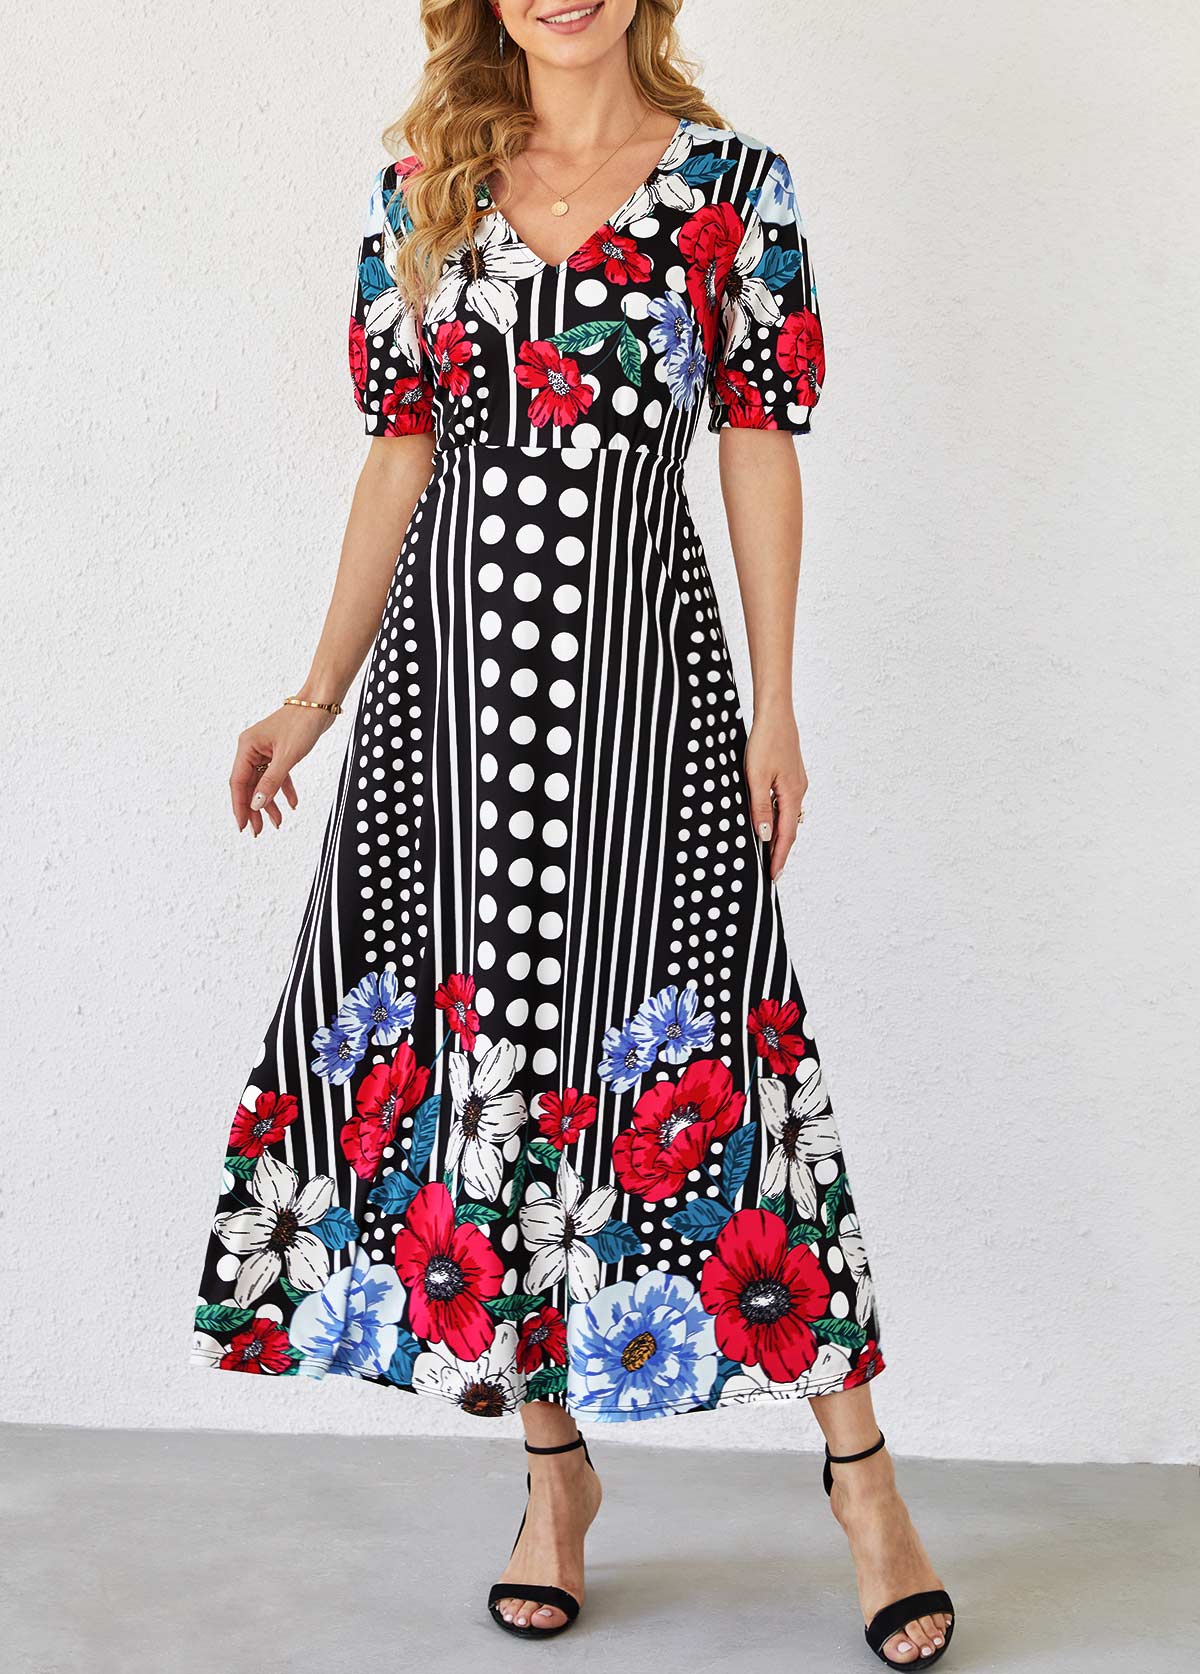 ROTITA Multi Color Polka Dot and Floral Print Dress